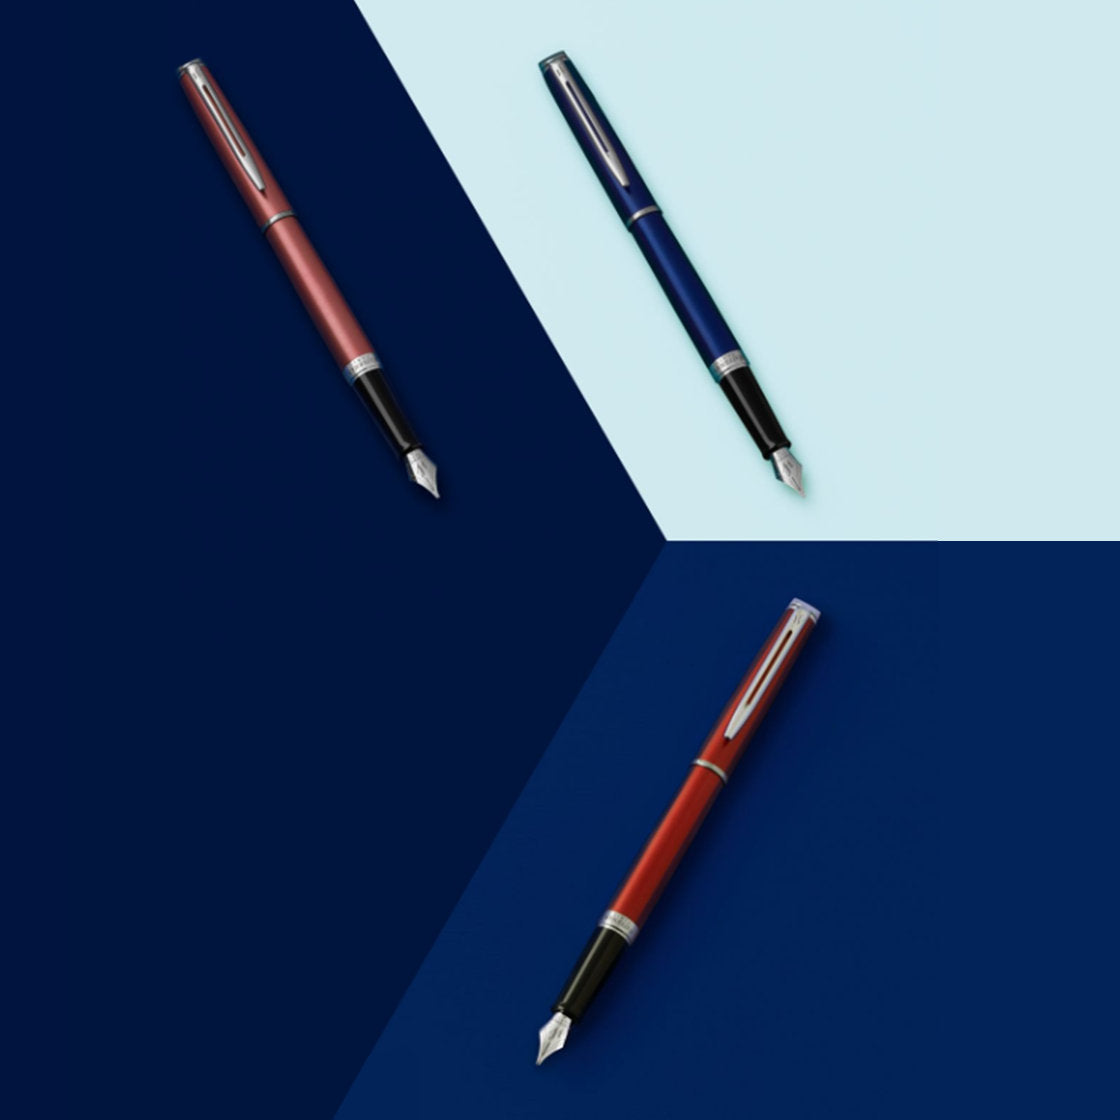 A.O. Guide ручка. Pen. Ручка the Shilla цена. Класс pen